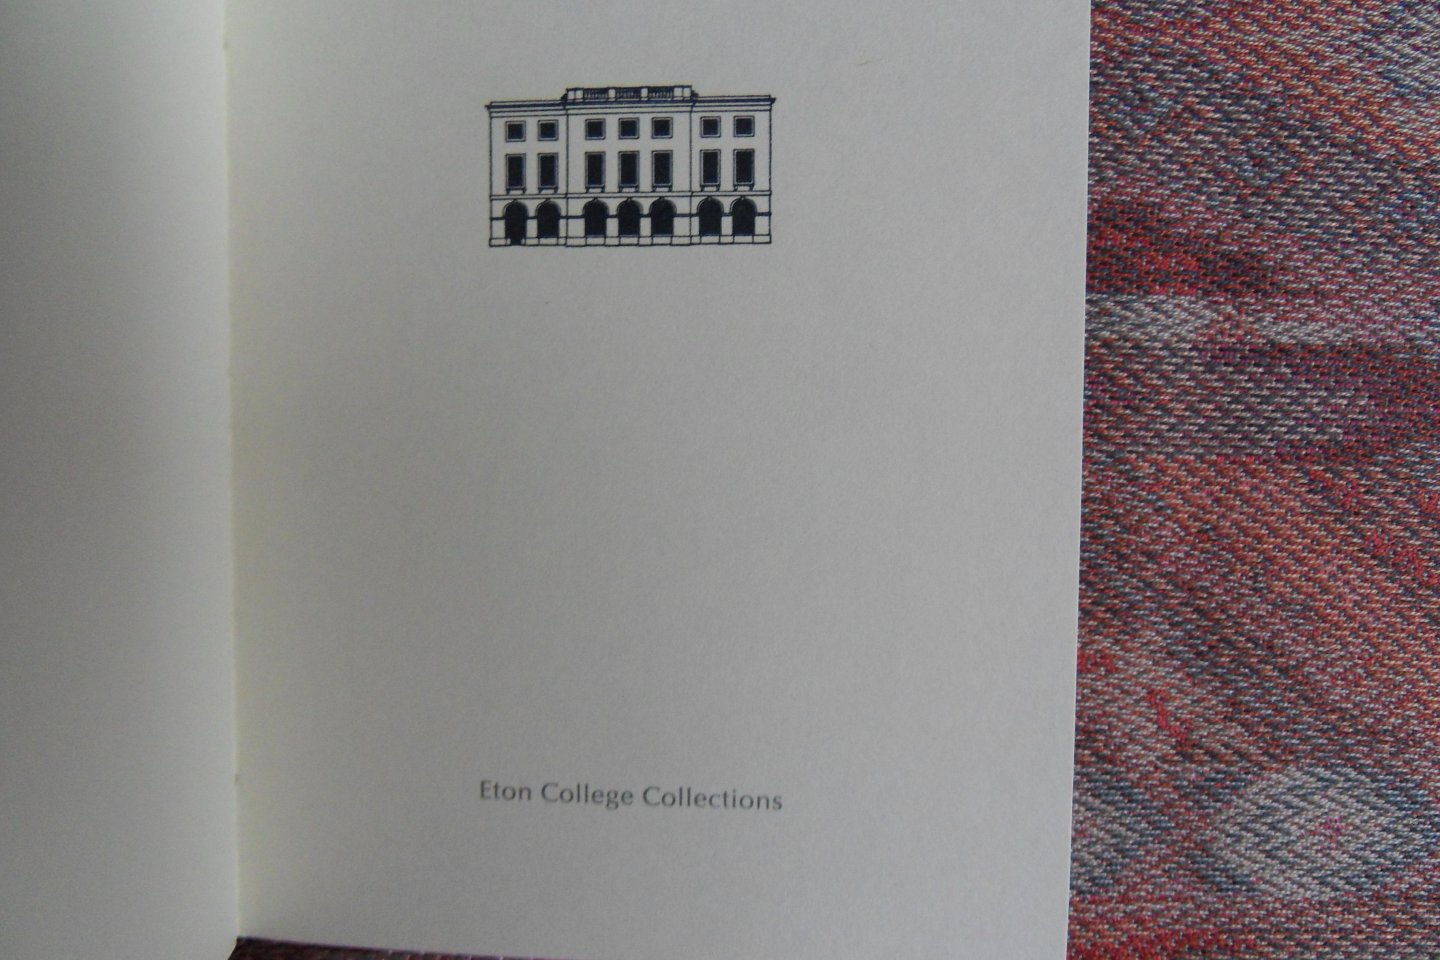 Carter, Sebastian. - Bookplates, Cartouches and Designs. [ Beperkte oplage van 150 ex. ]. - The Henry Davis Gift 1977.